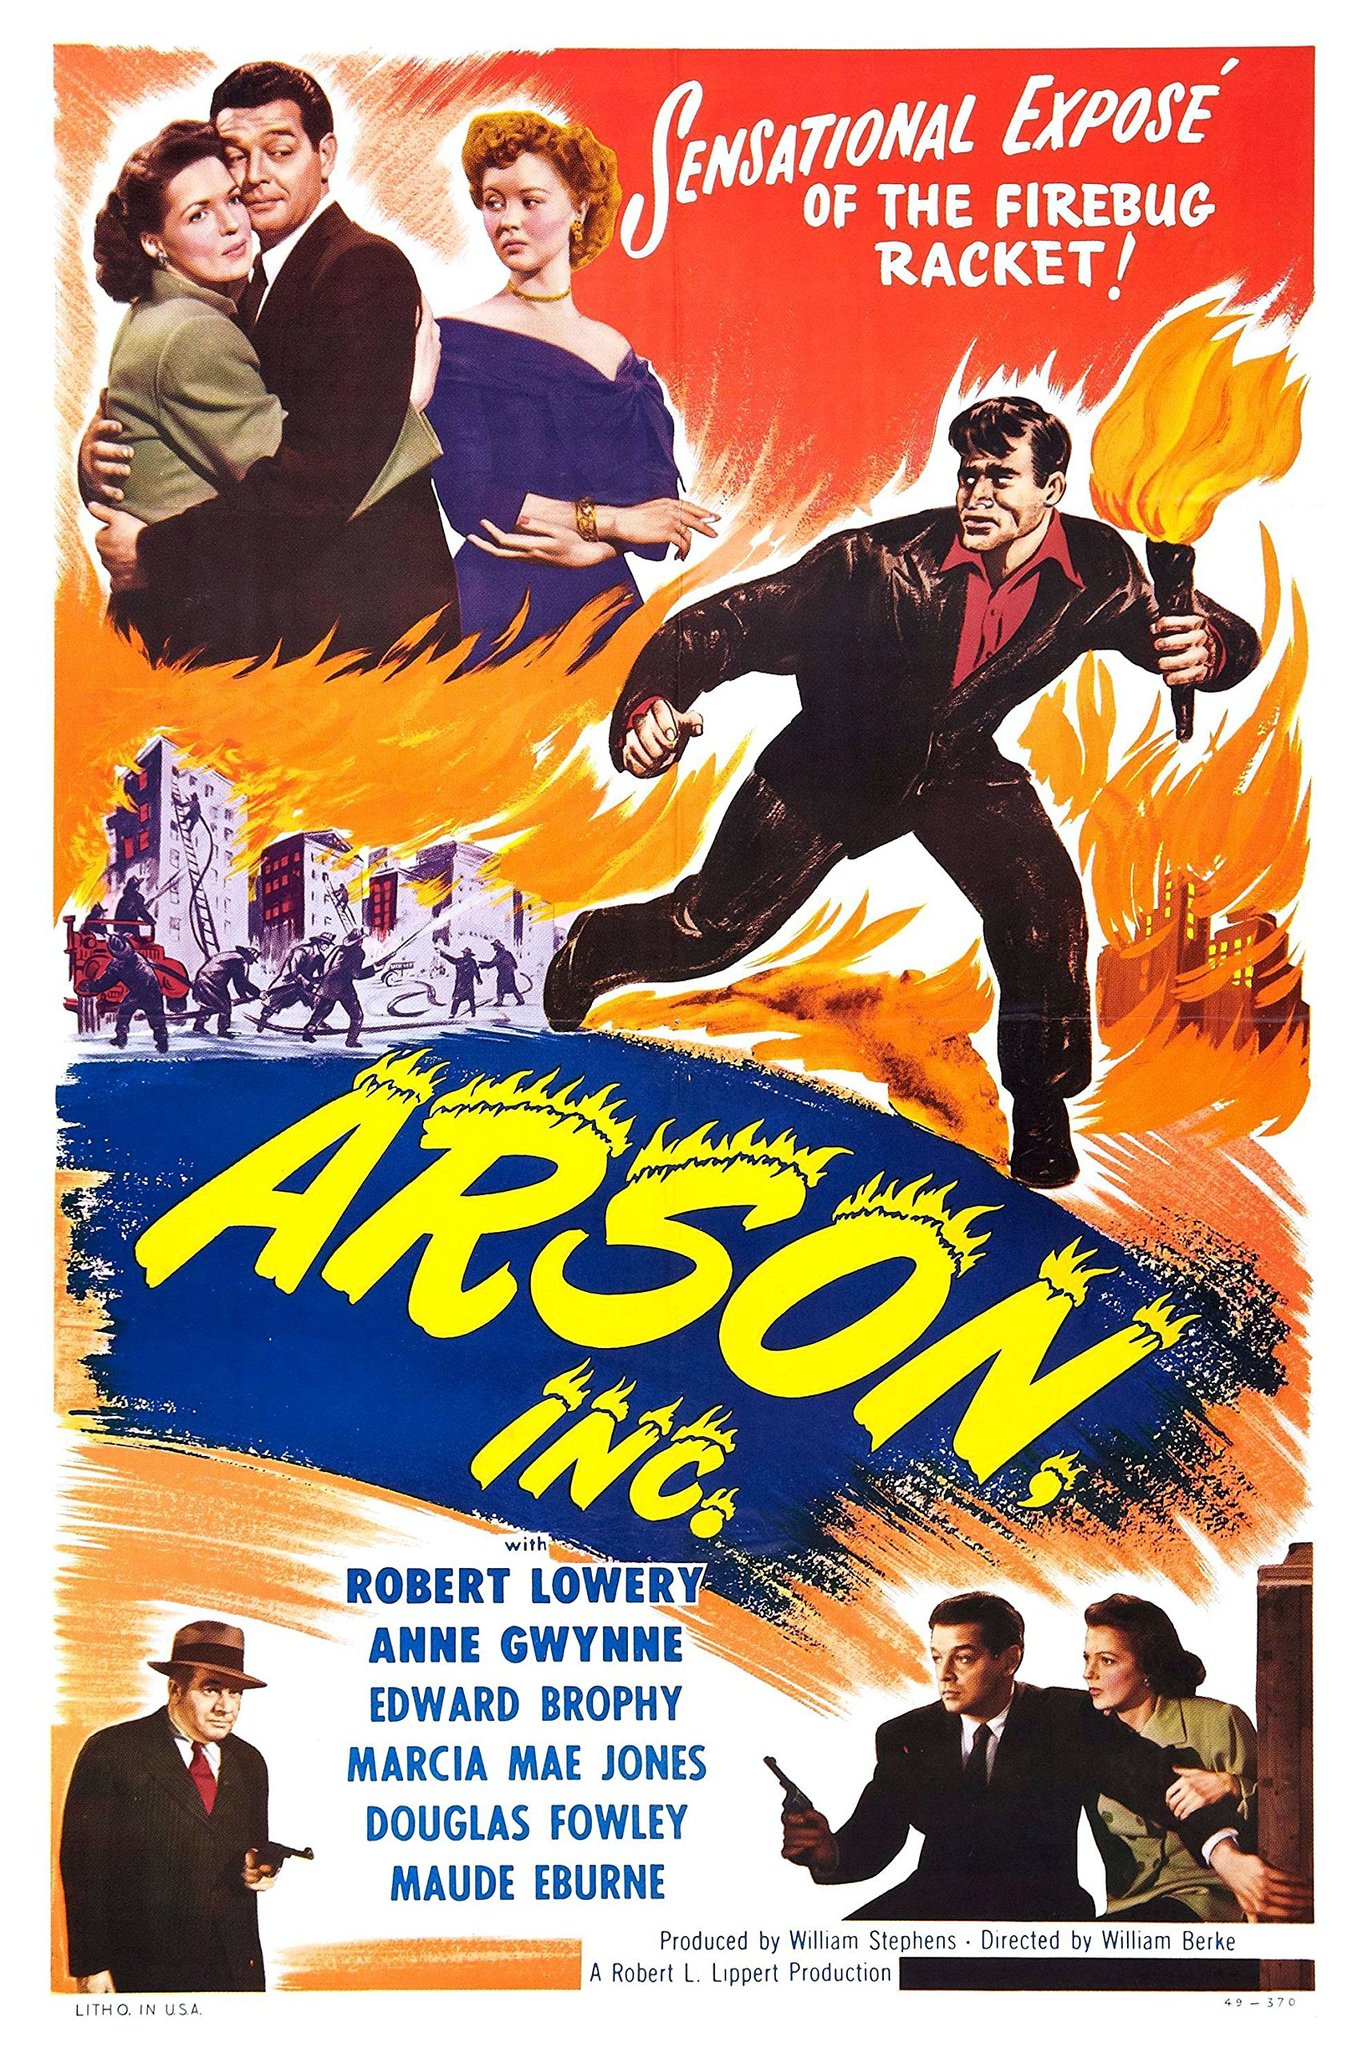 Arson, Inc. (1949) starring Robert Lowery on DVD on DVD